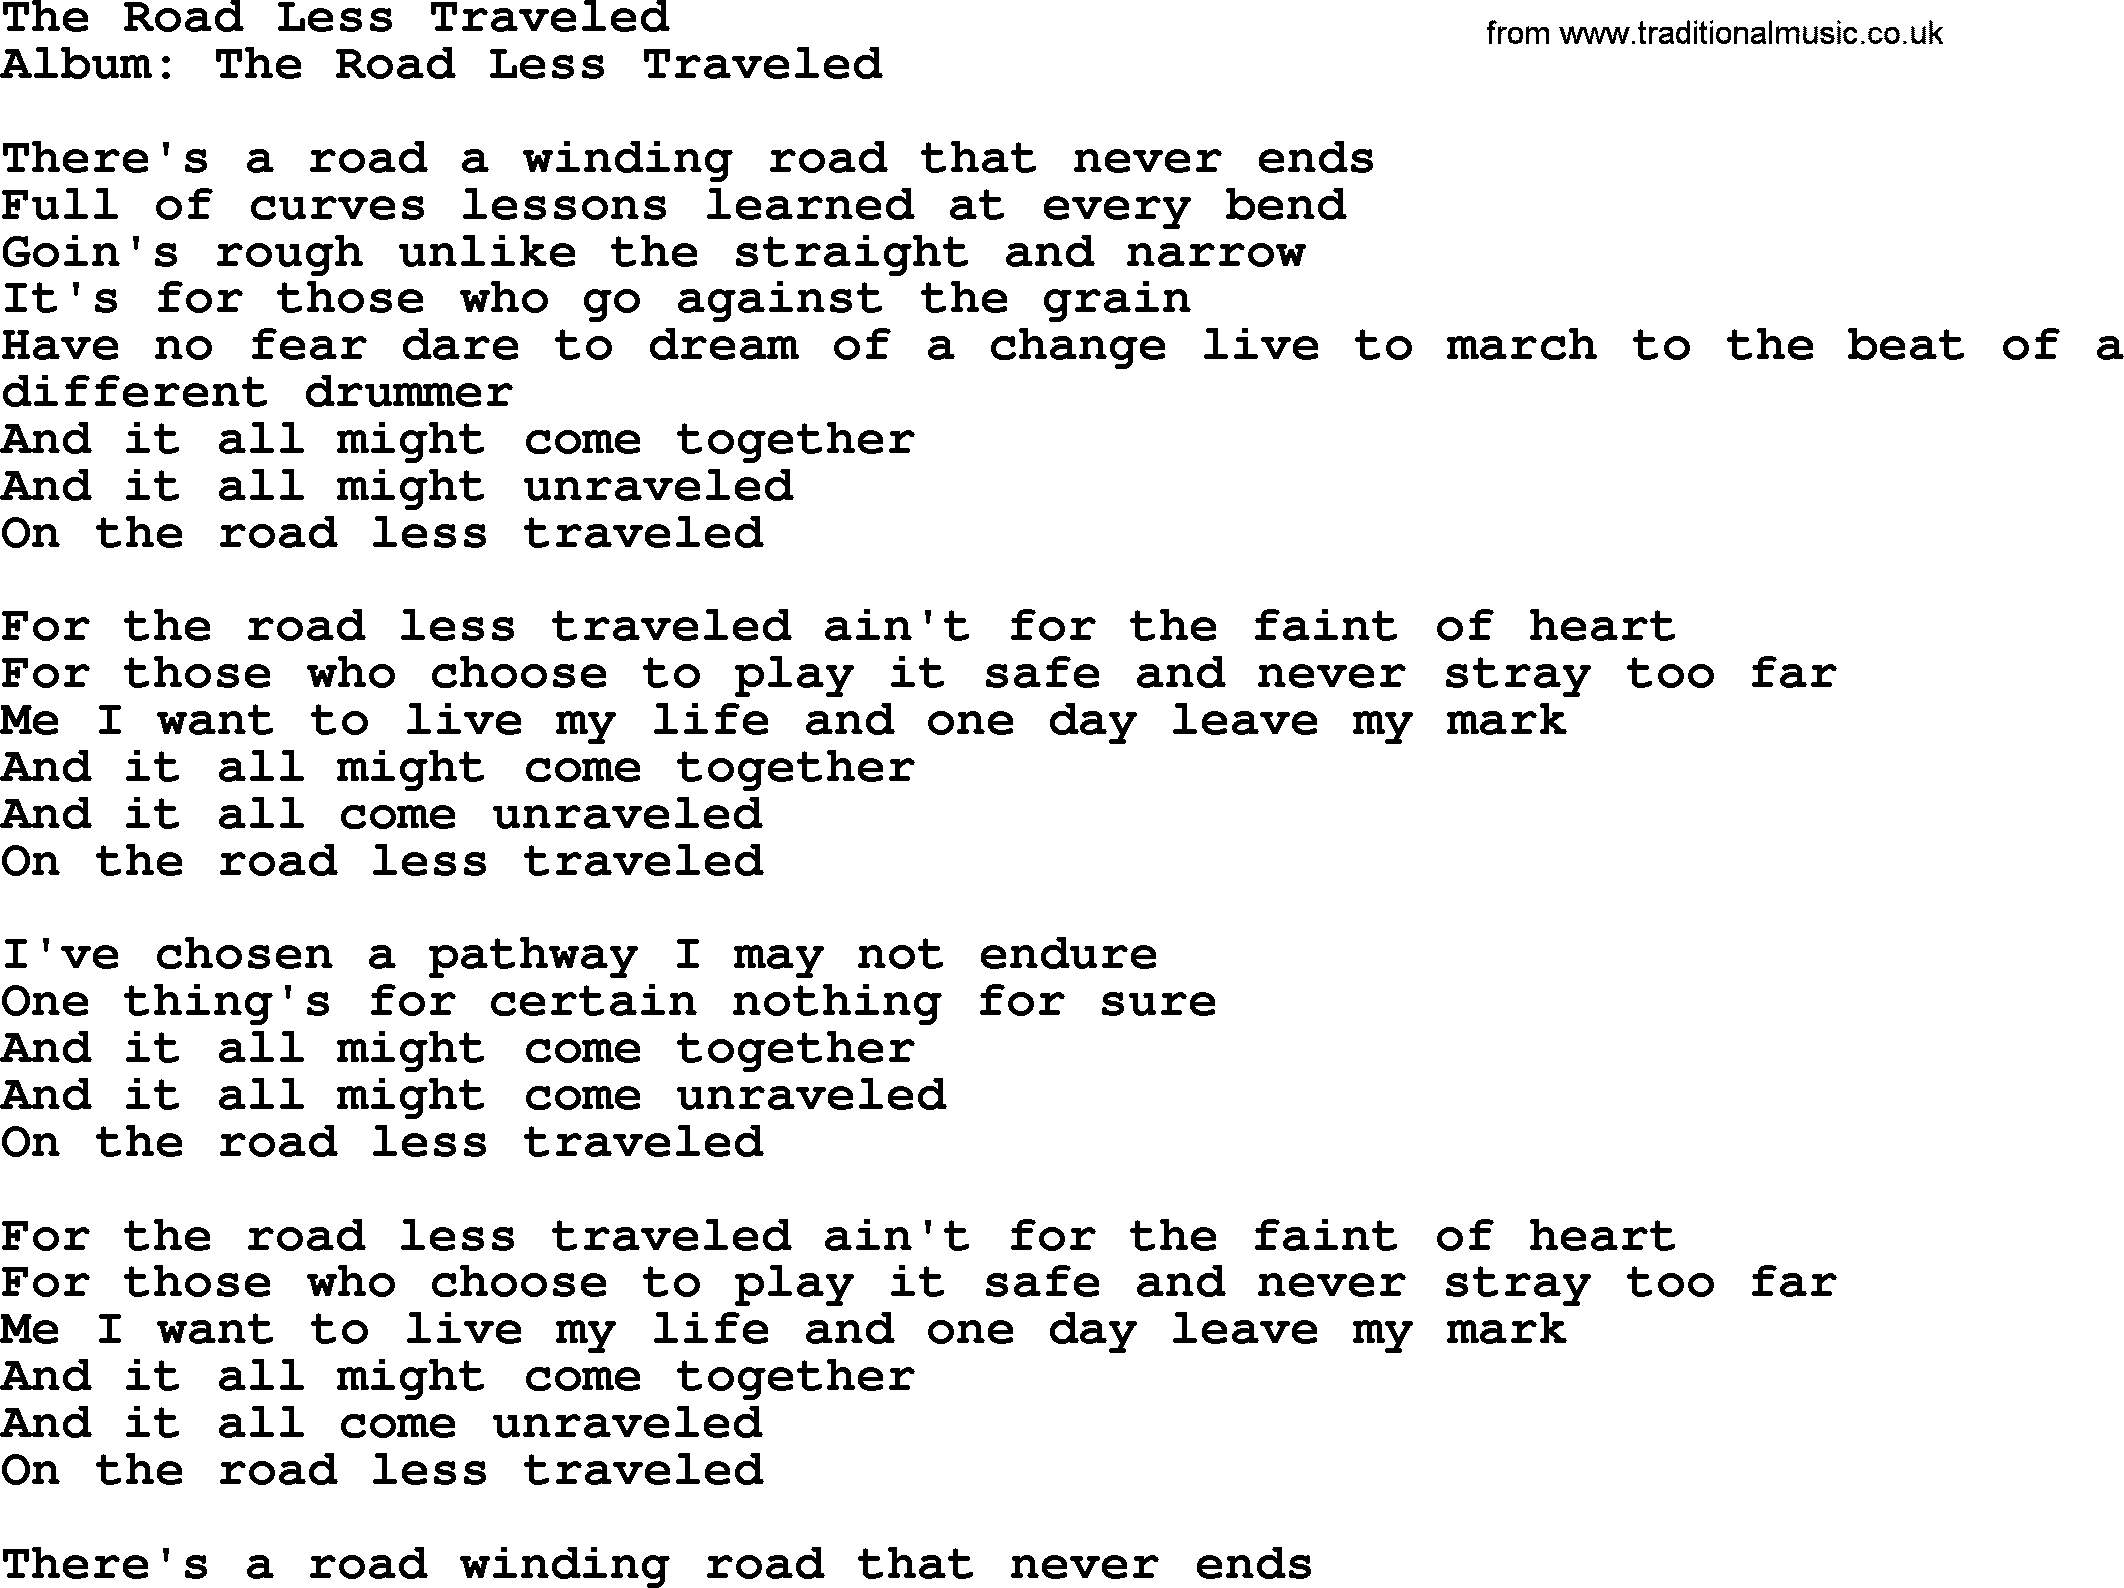 George Strait song: The Road Less Traveled, lyrics